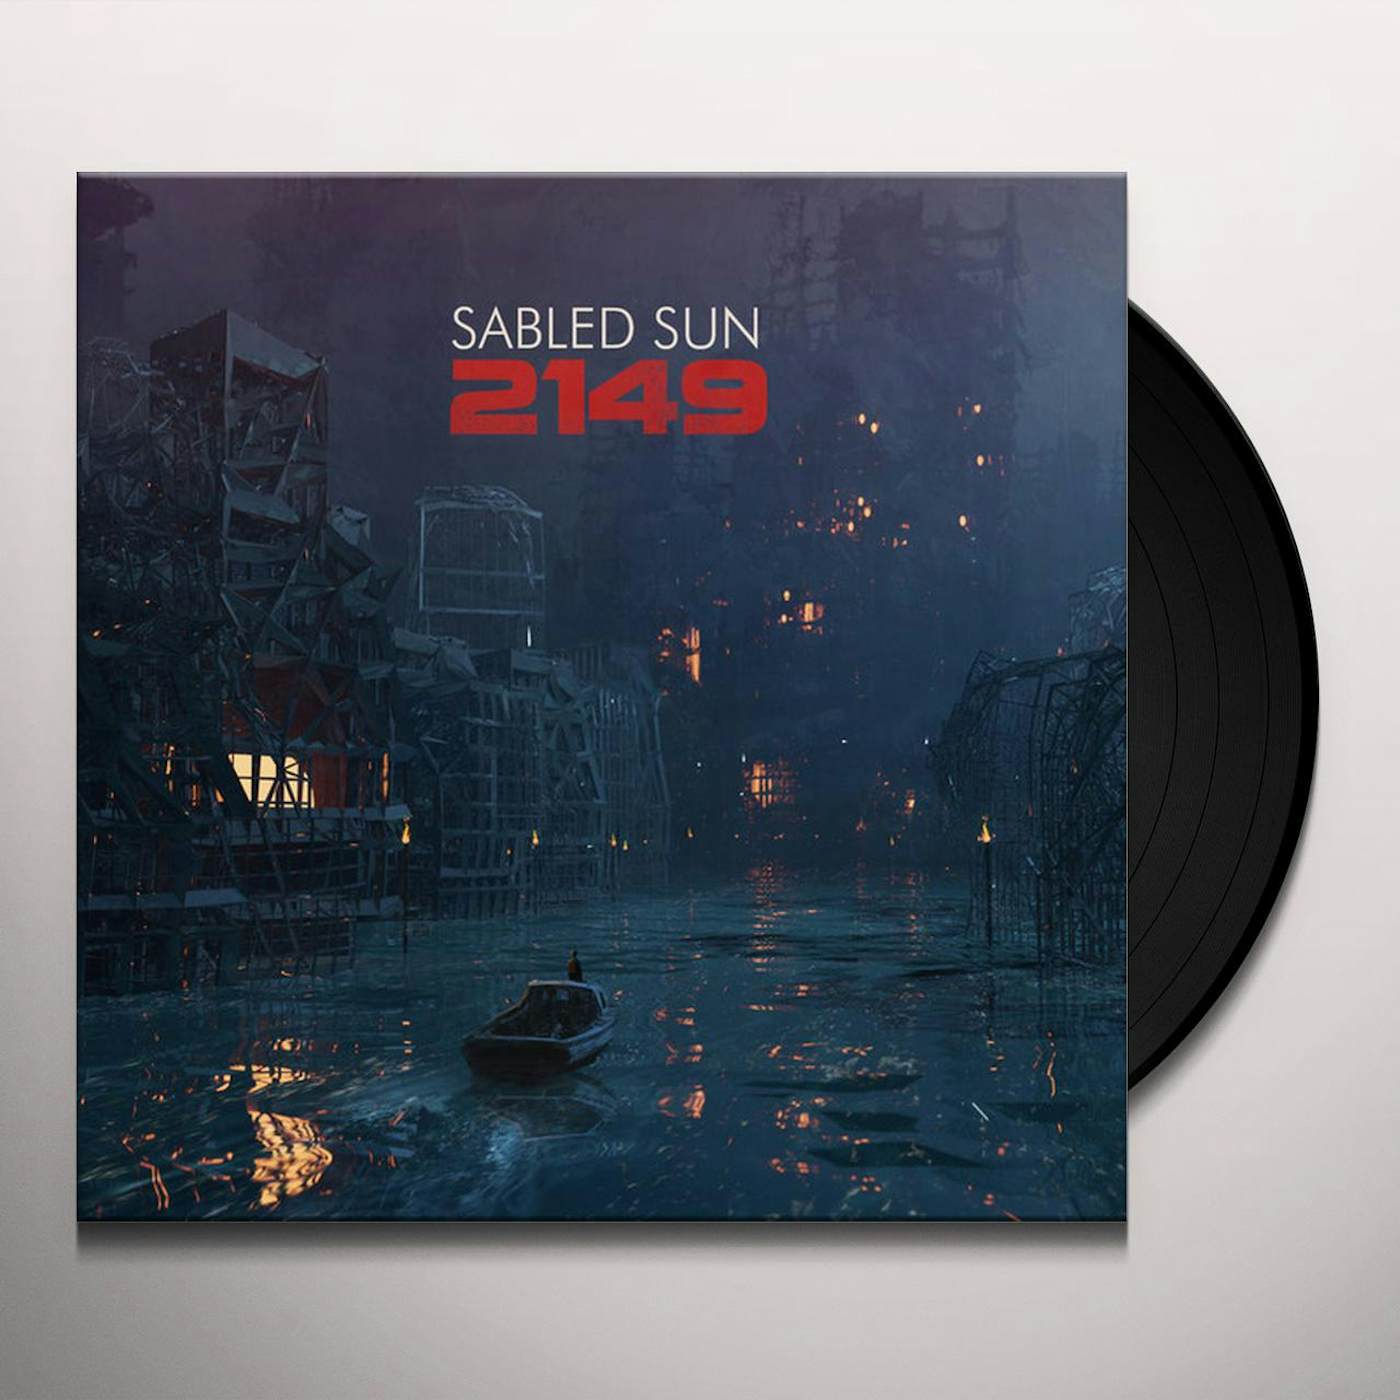 Sabled Sun 2149 Vinyl Record